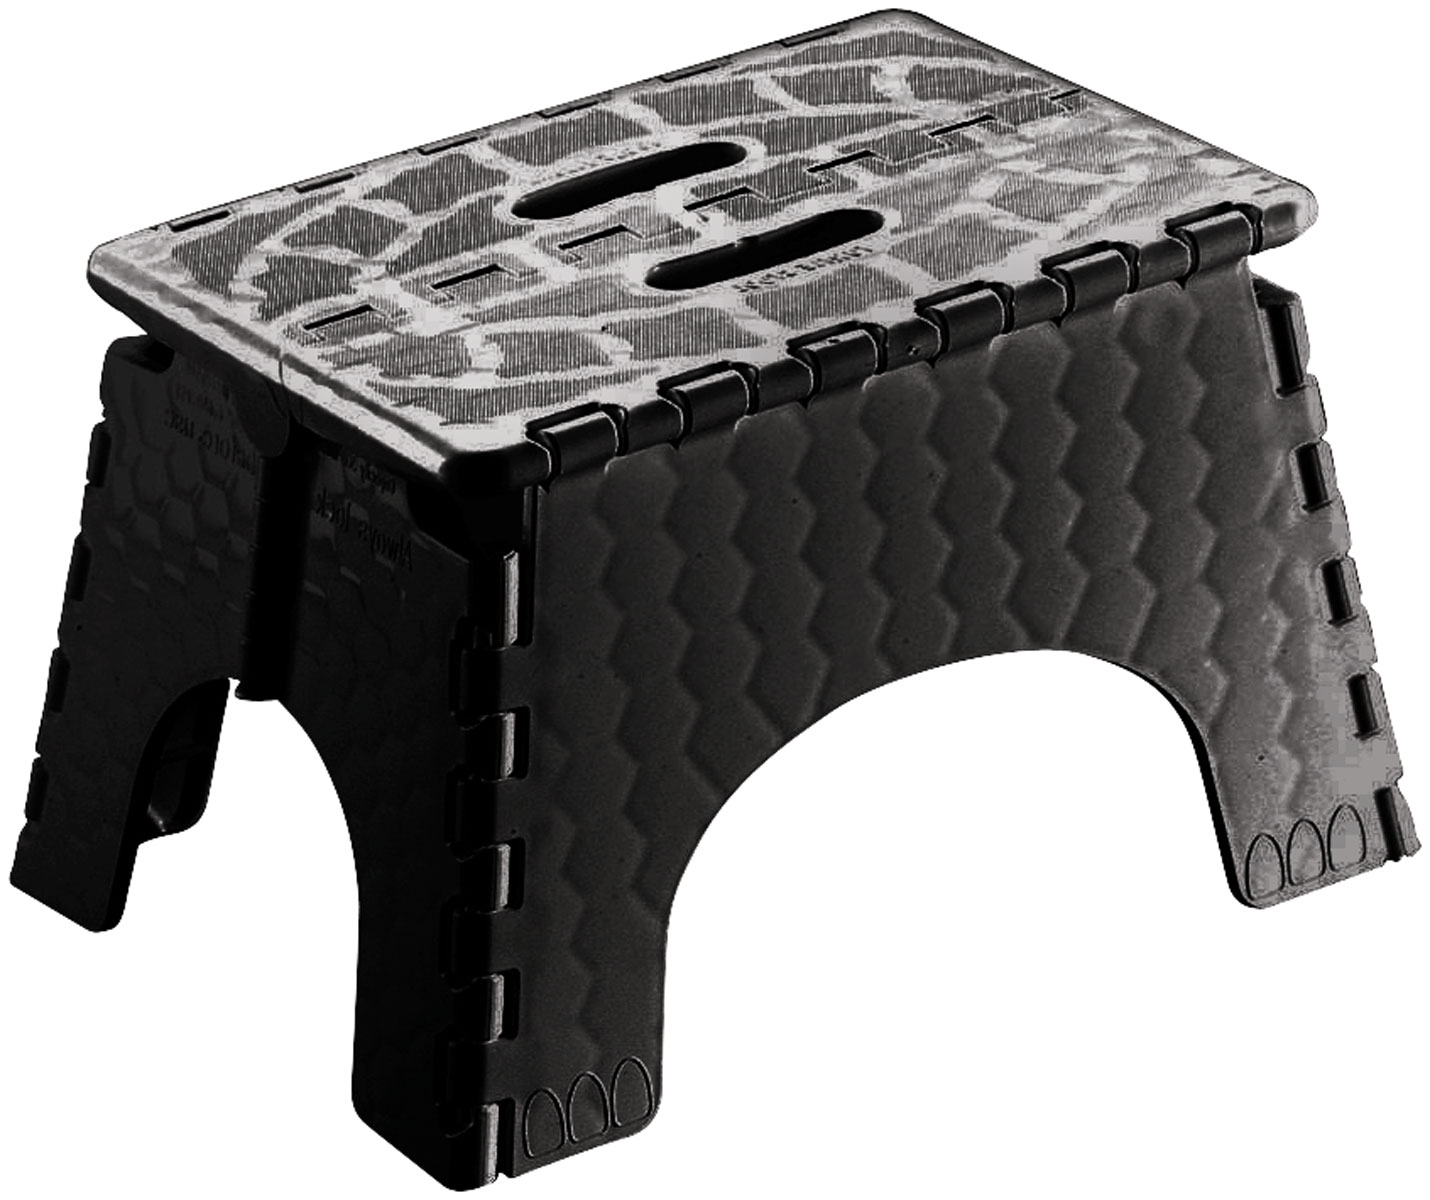 black folding step stool chair organizeme